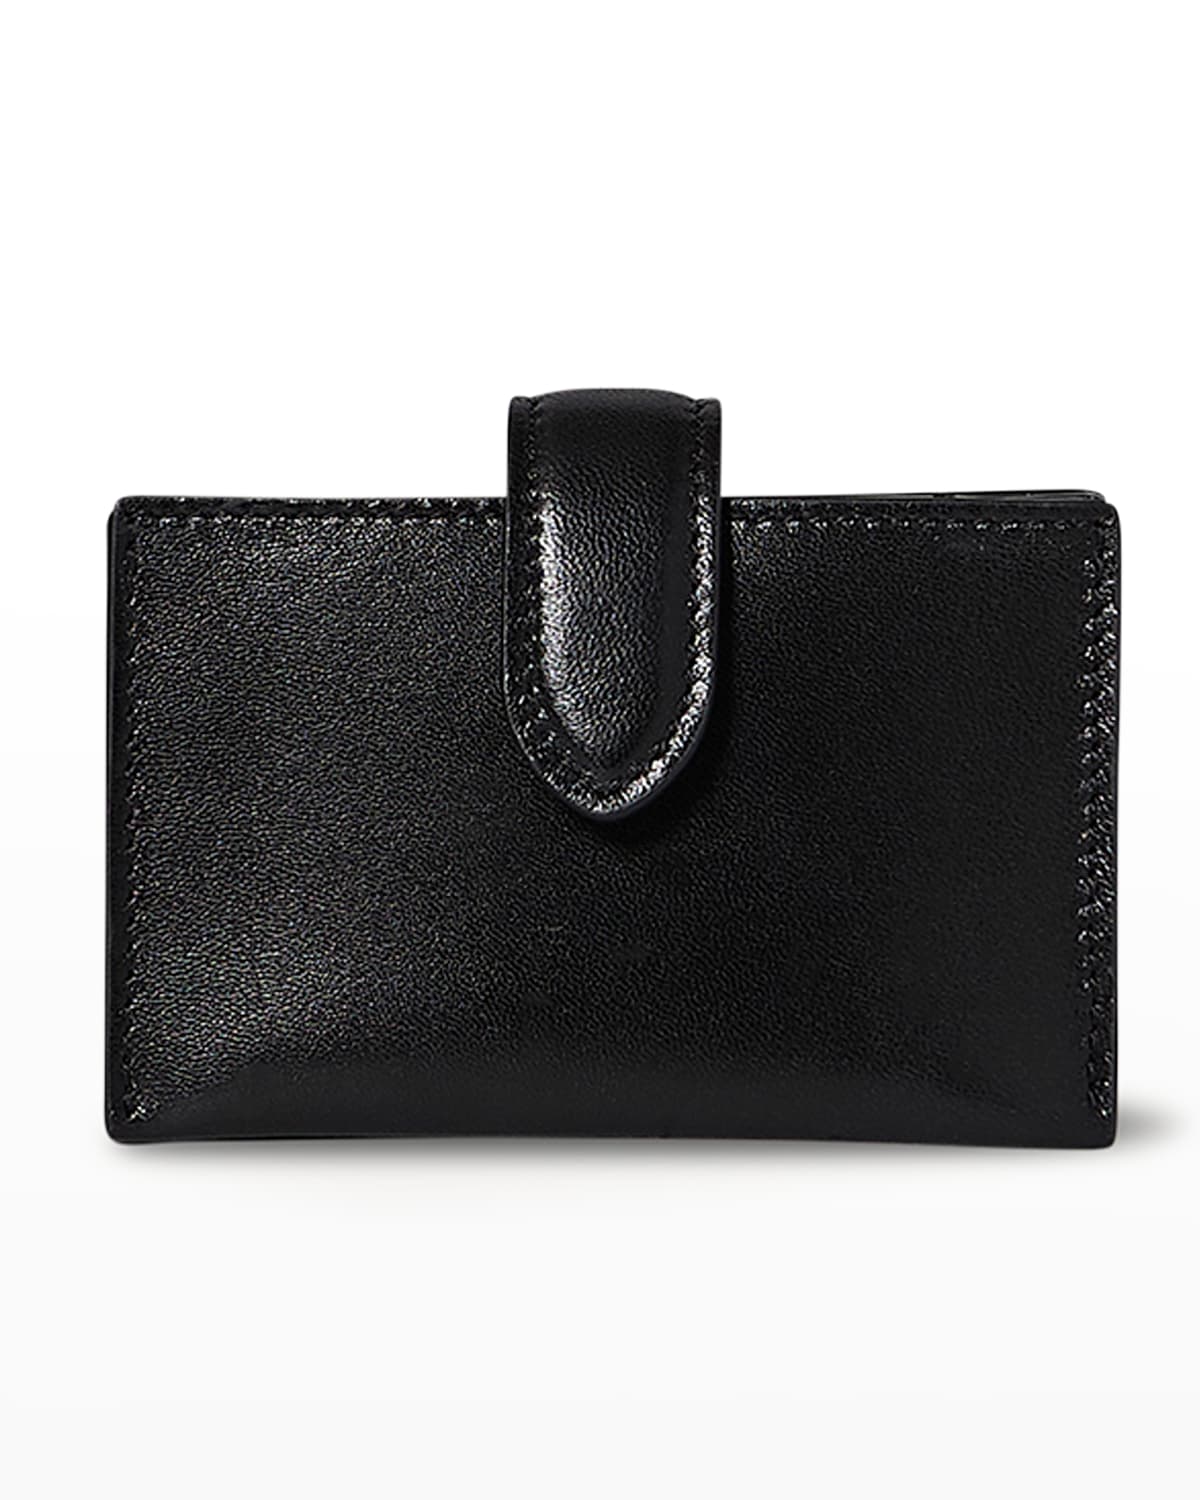 Prada Saffiano Leather Small Wallet | Neiman Marcus